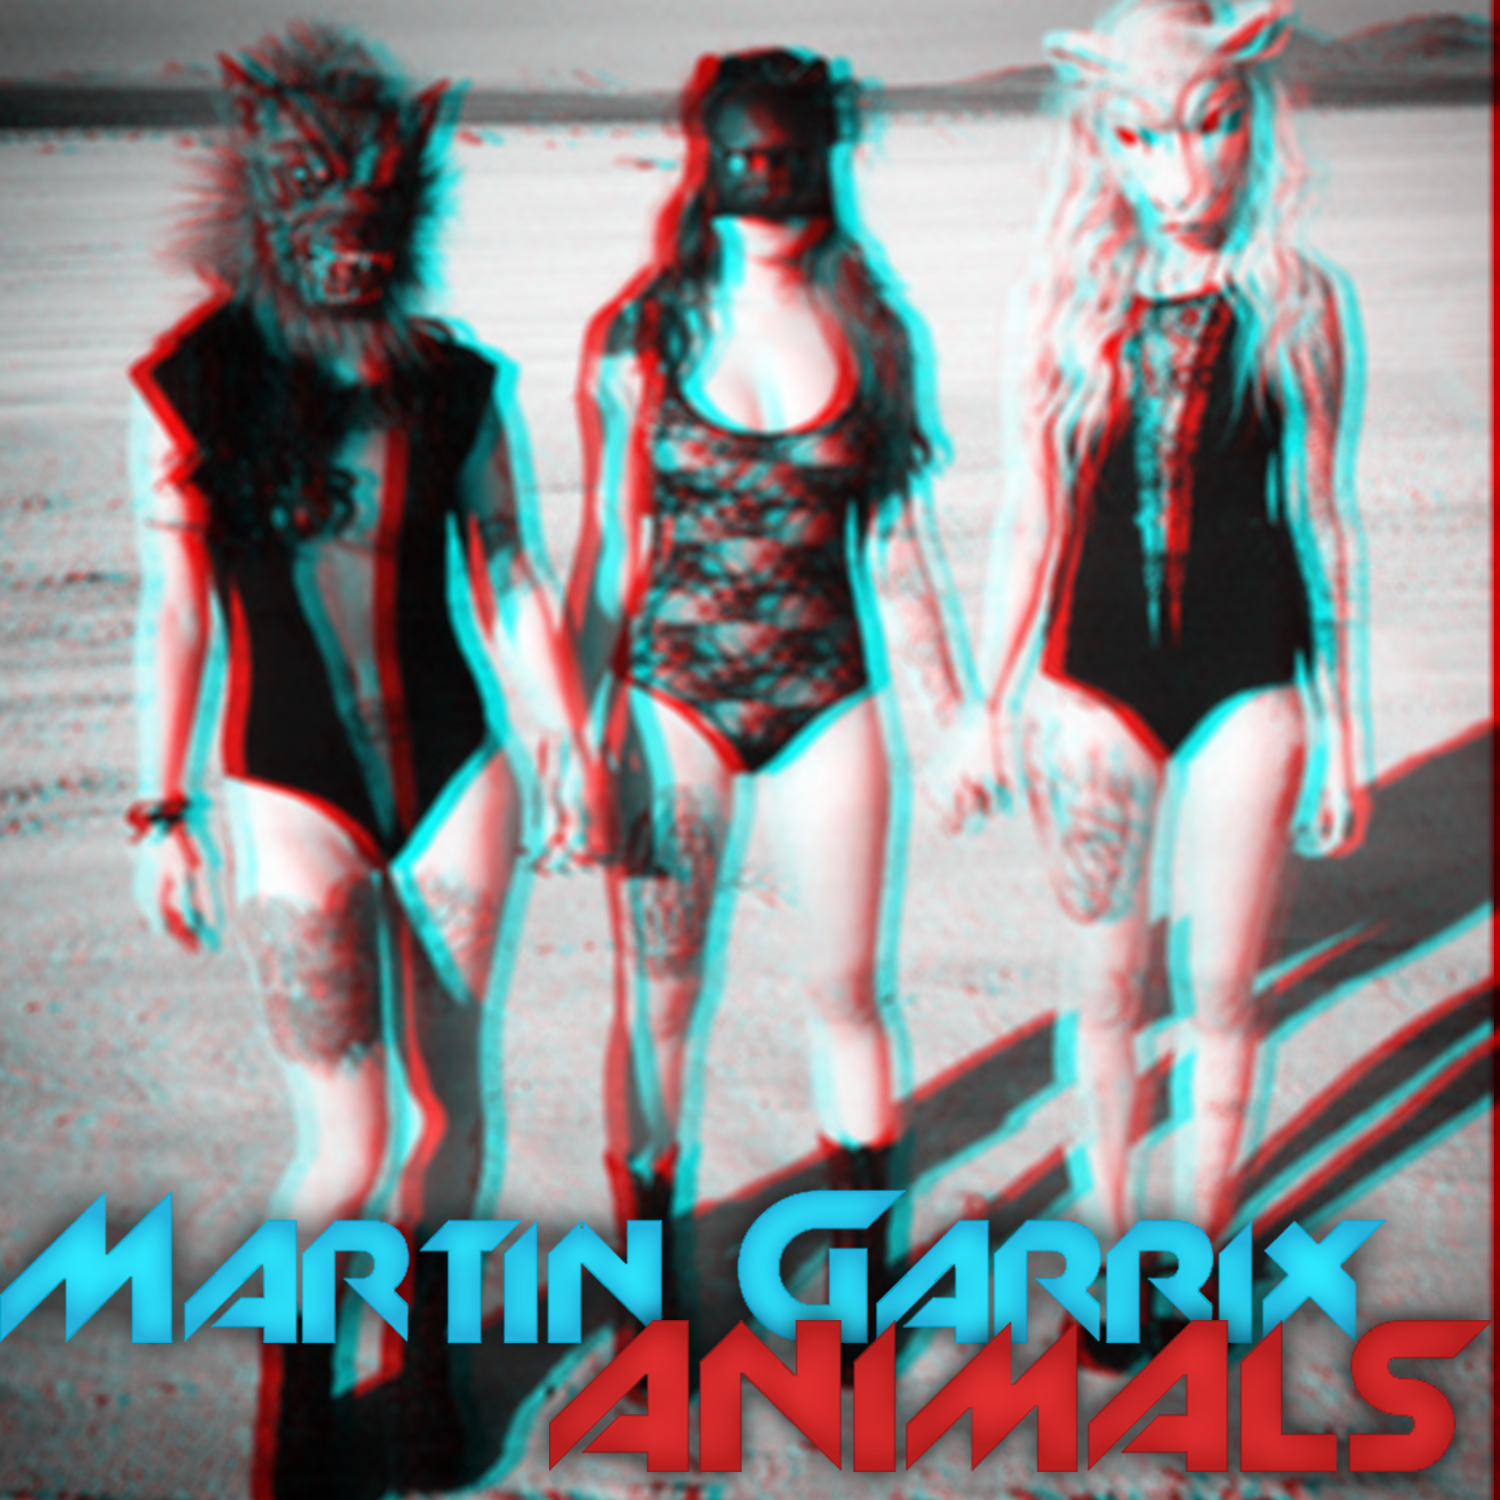 Martin garrix animals alternative by cal2021 on DeviantArt